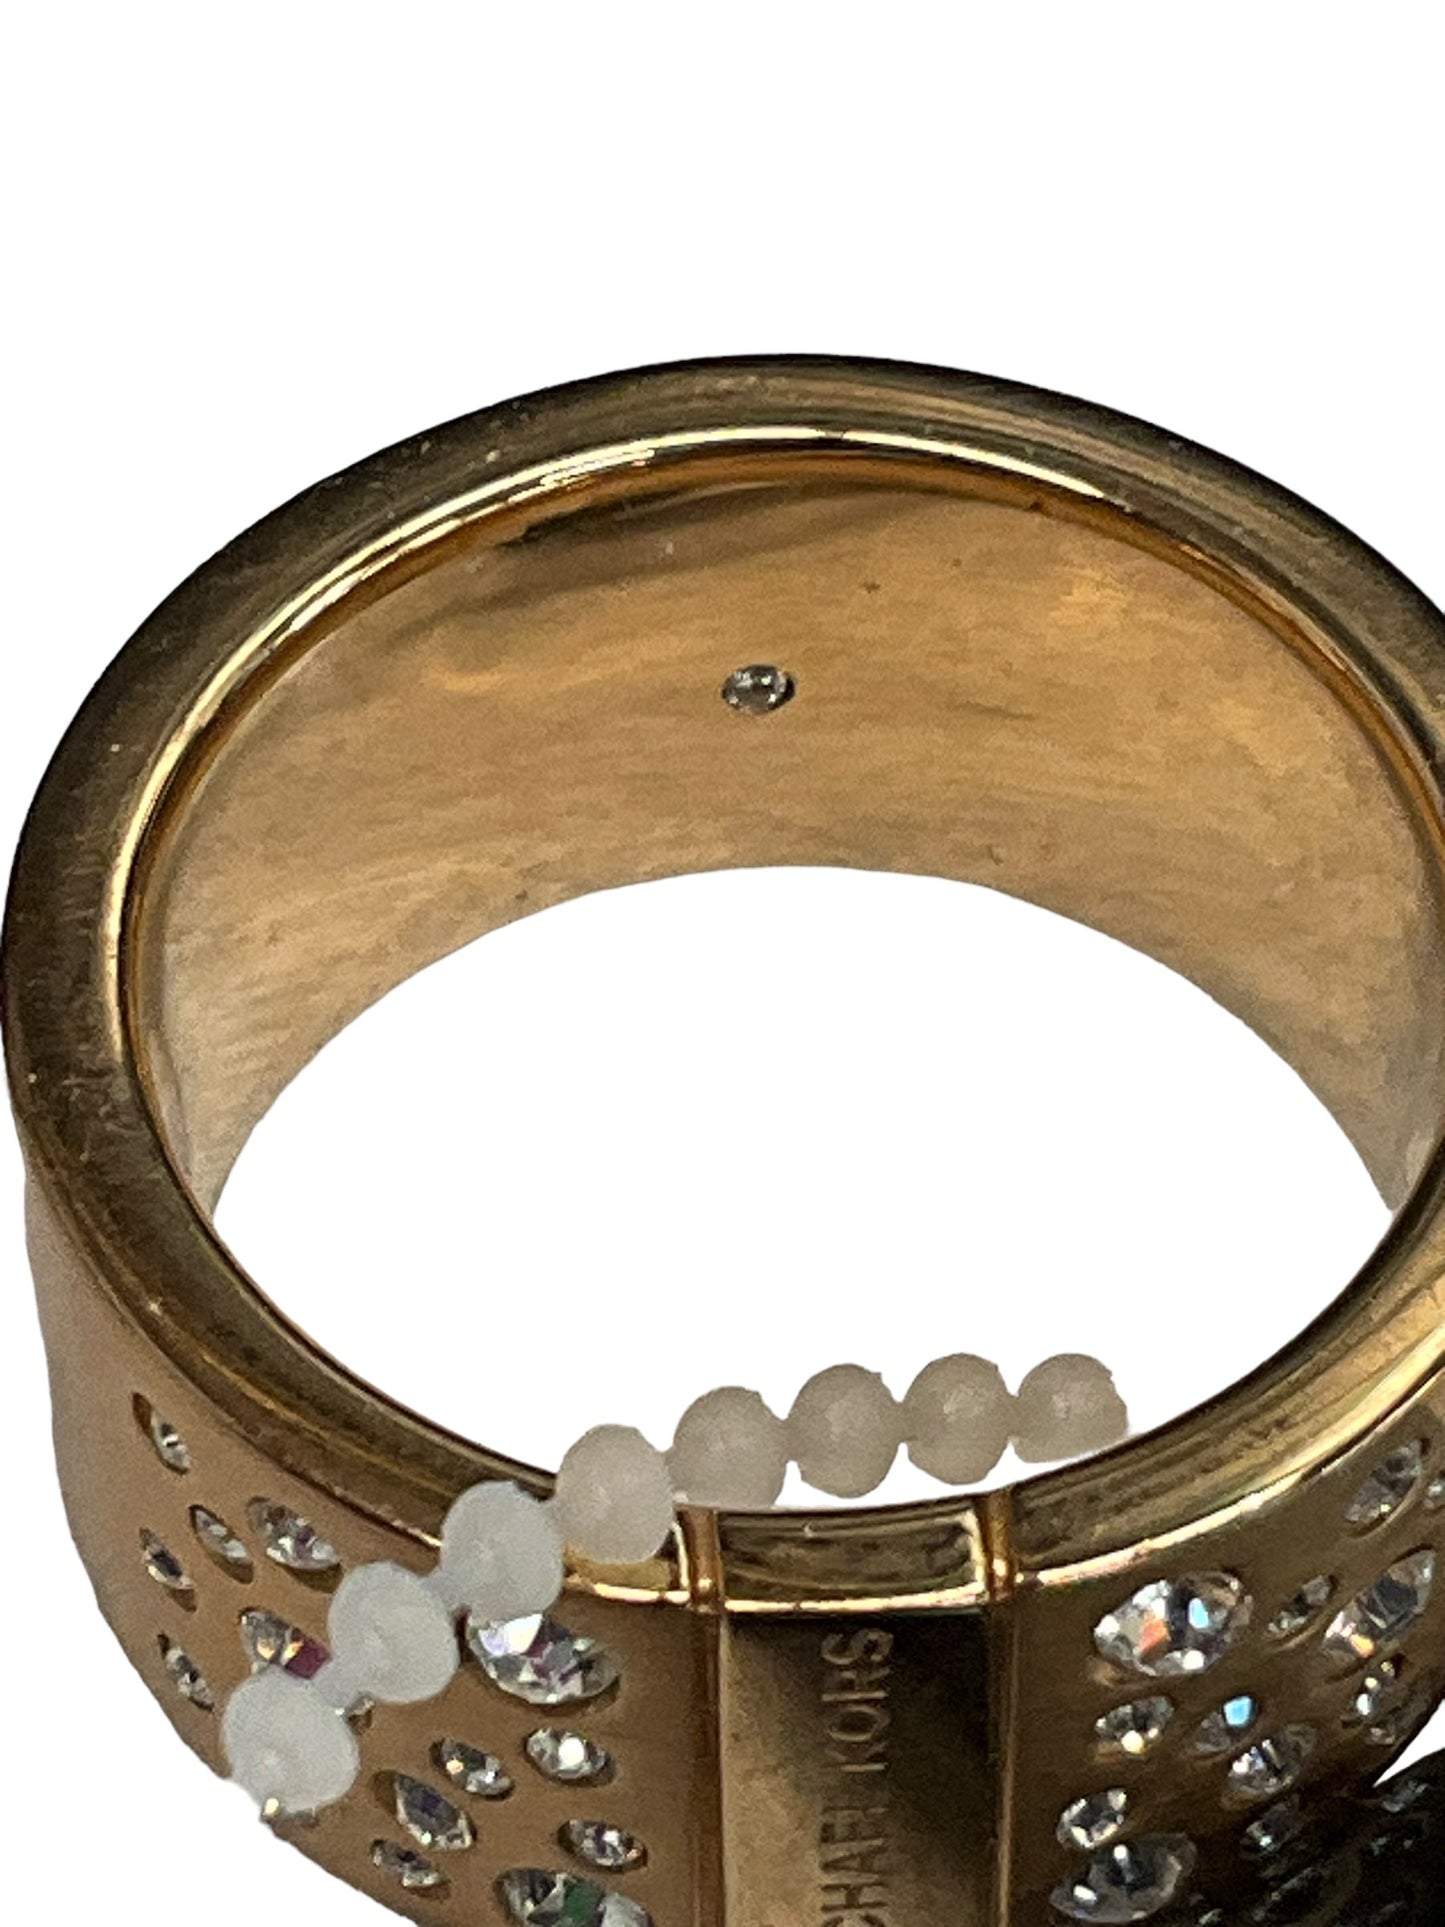 Ring Band Michael Kors, Size 8.5